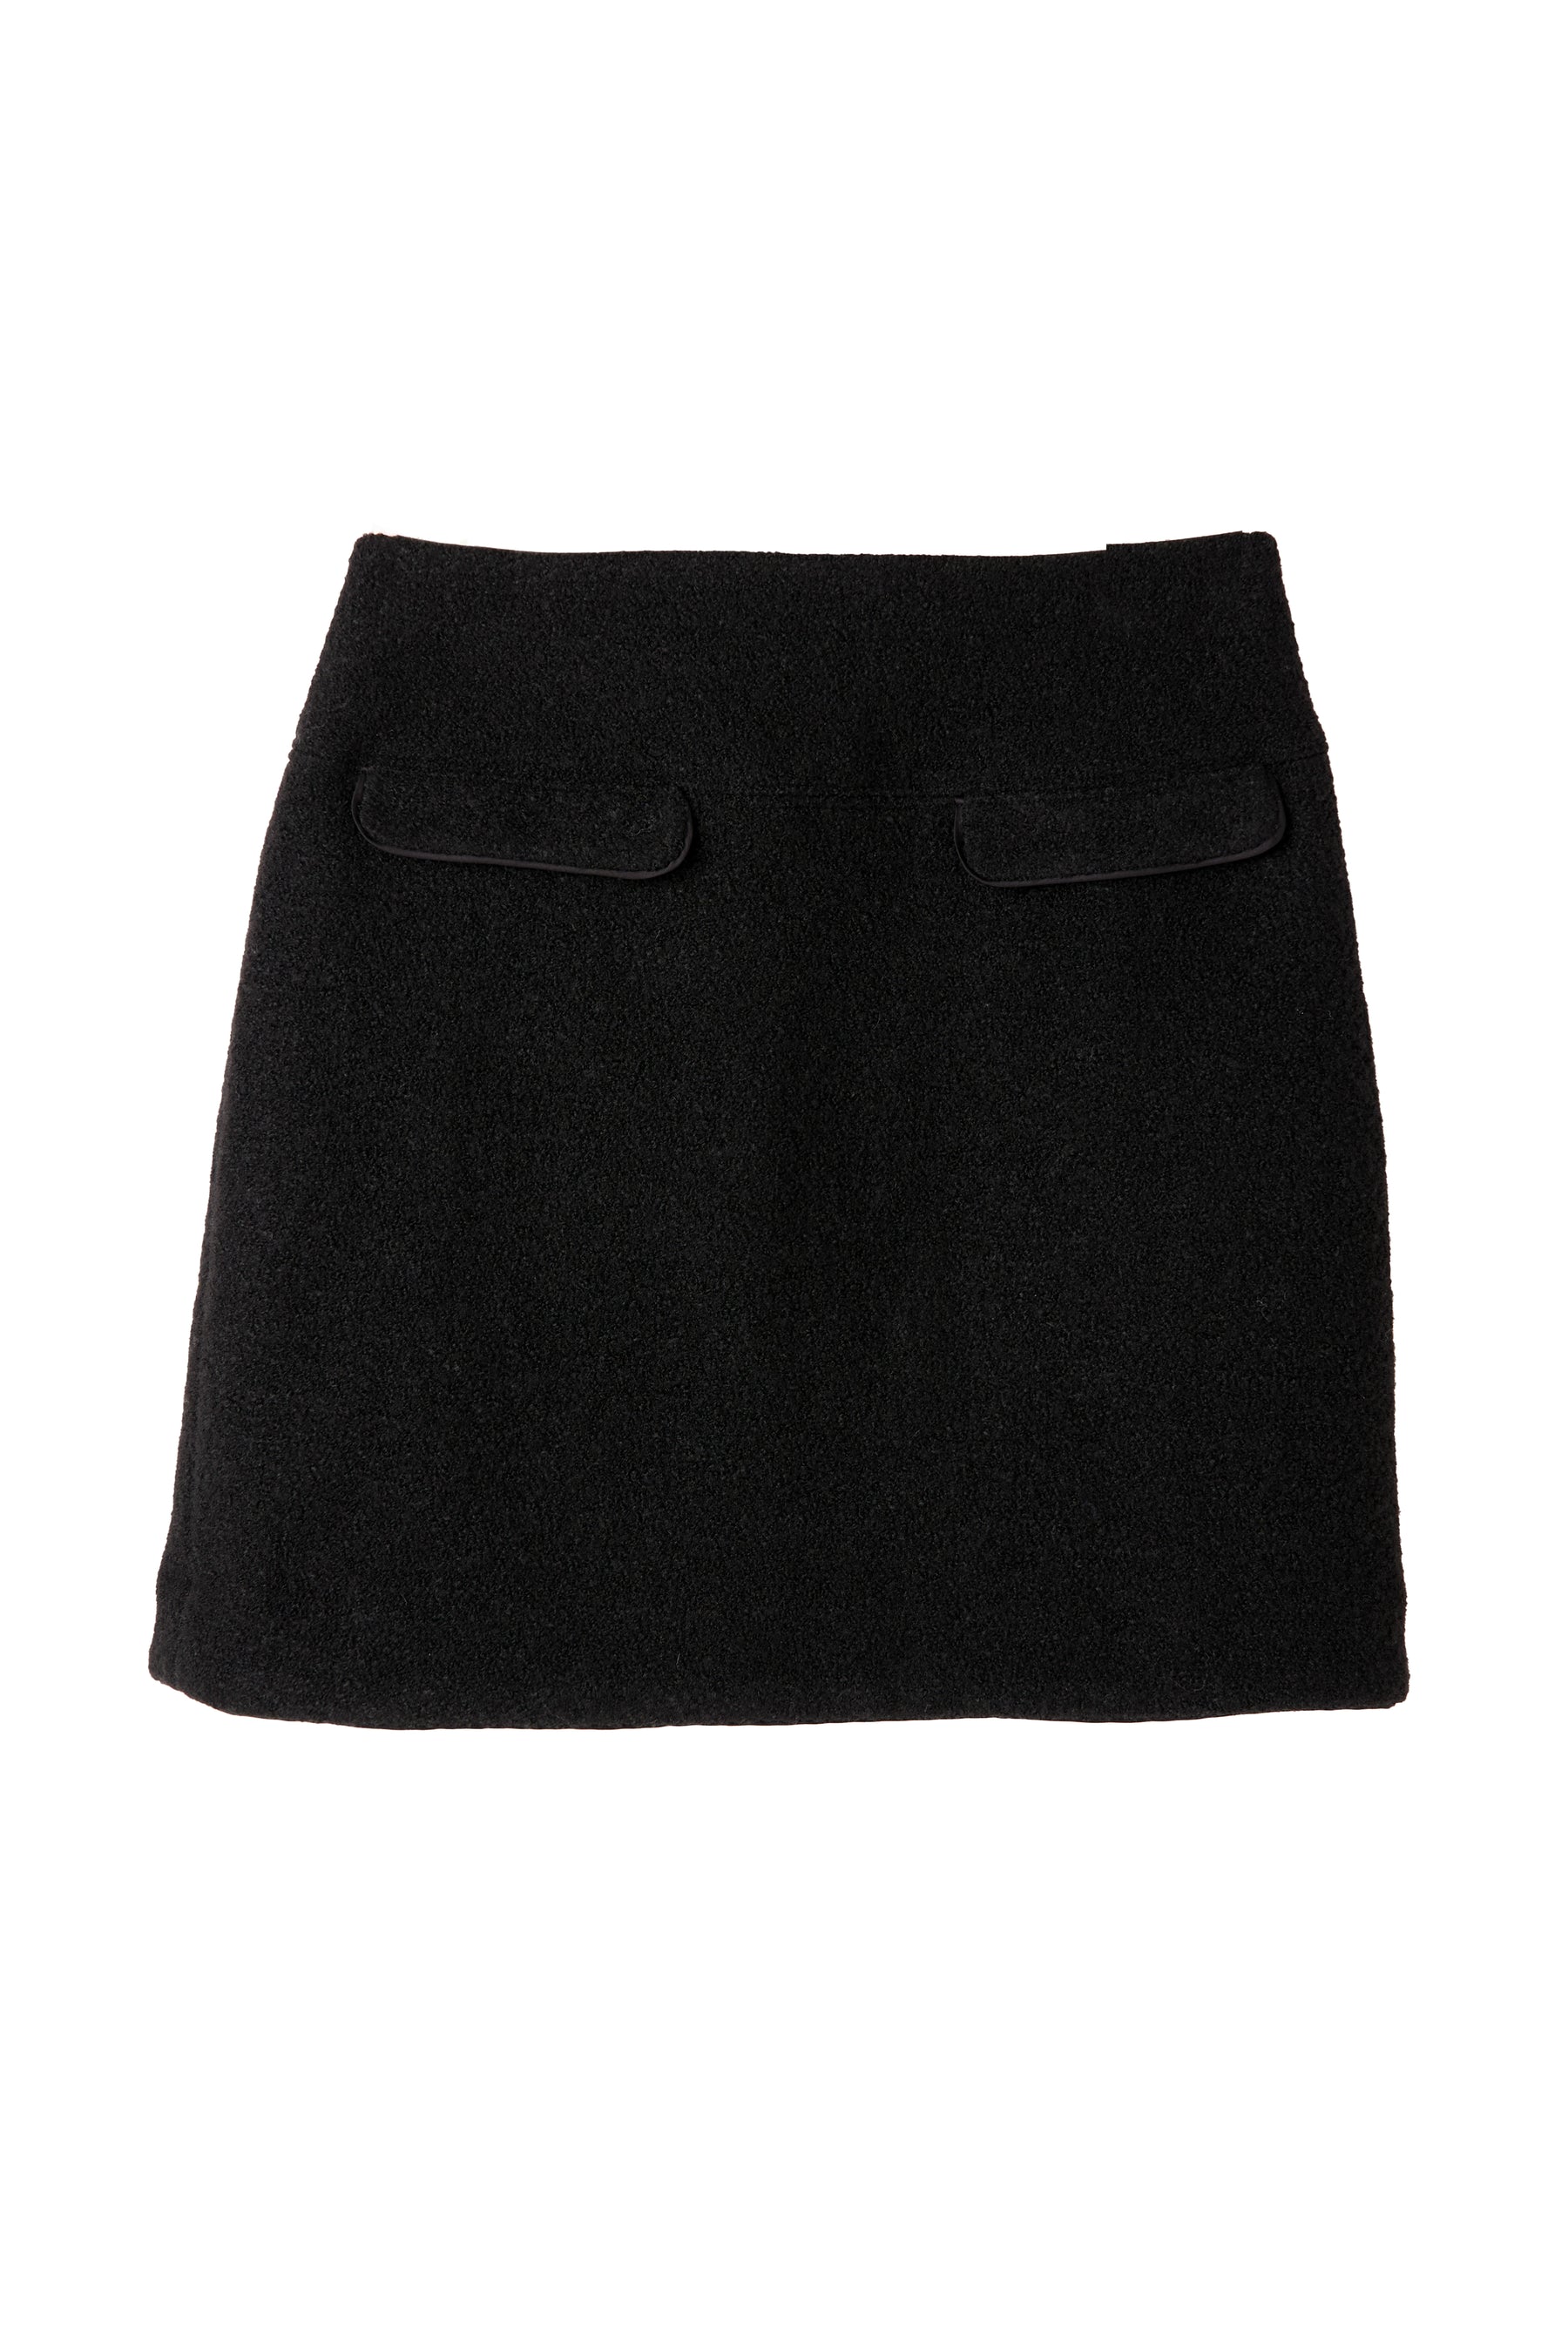 6,750円【新品未使用】herlipto Hemingway Boucle Skirt